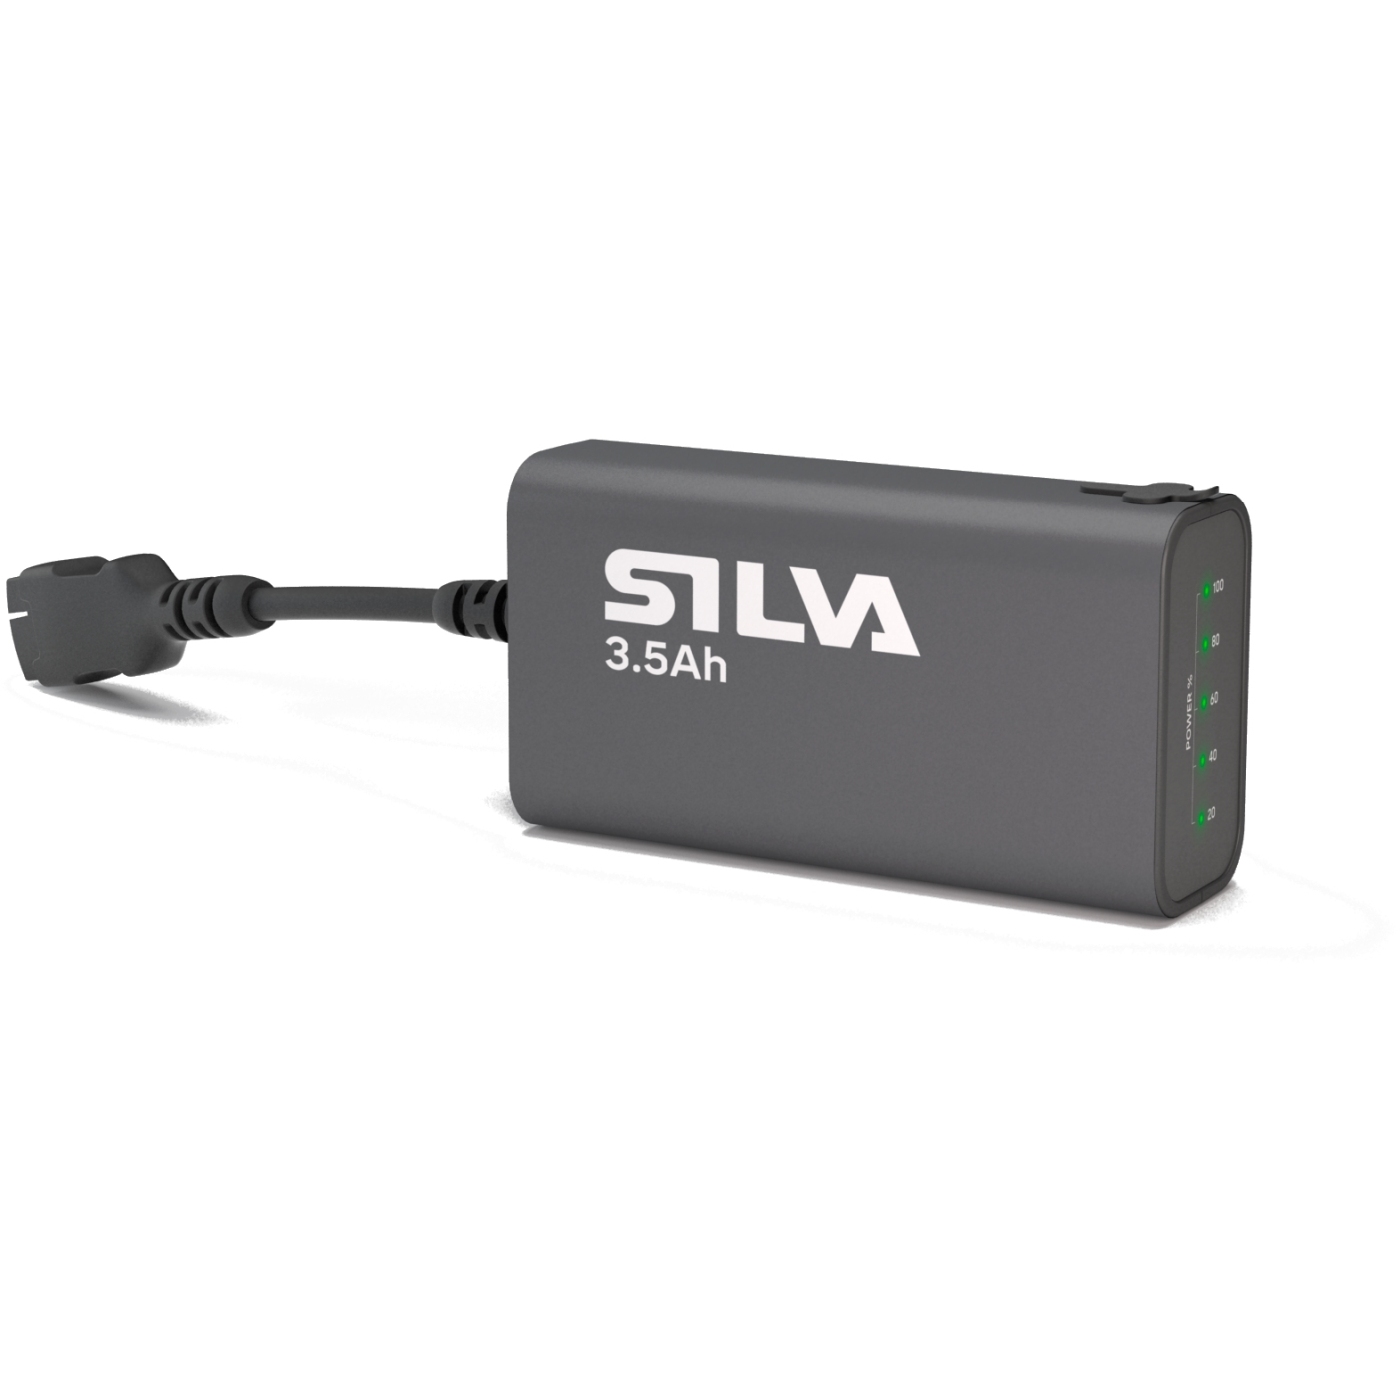 Productfoto van Silva Battery 3.5Ah